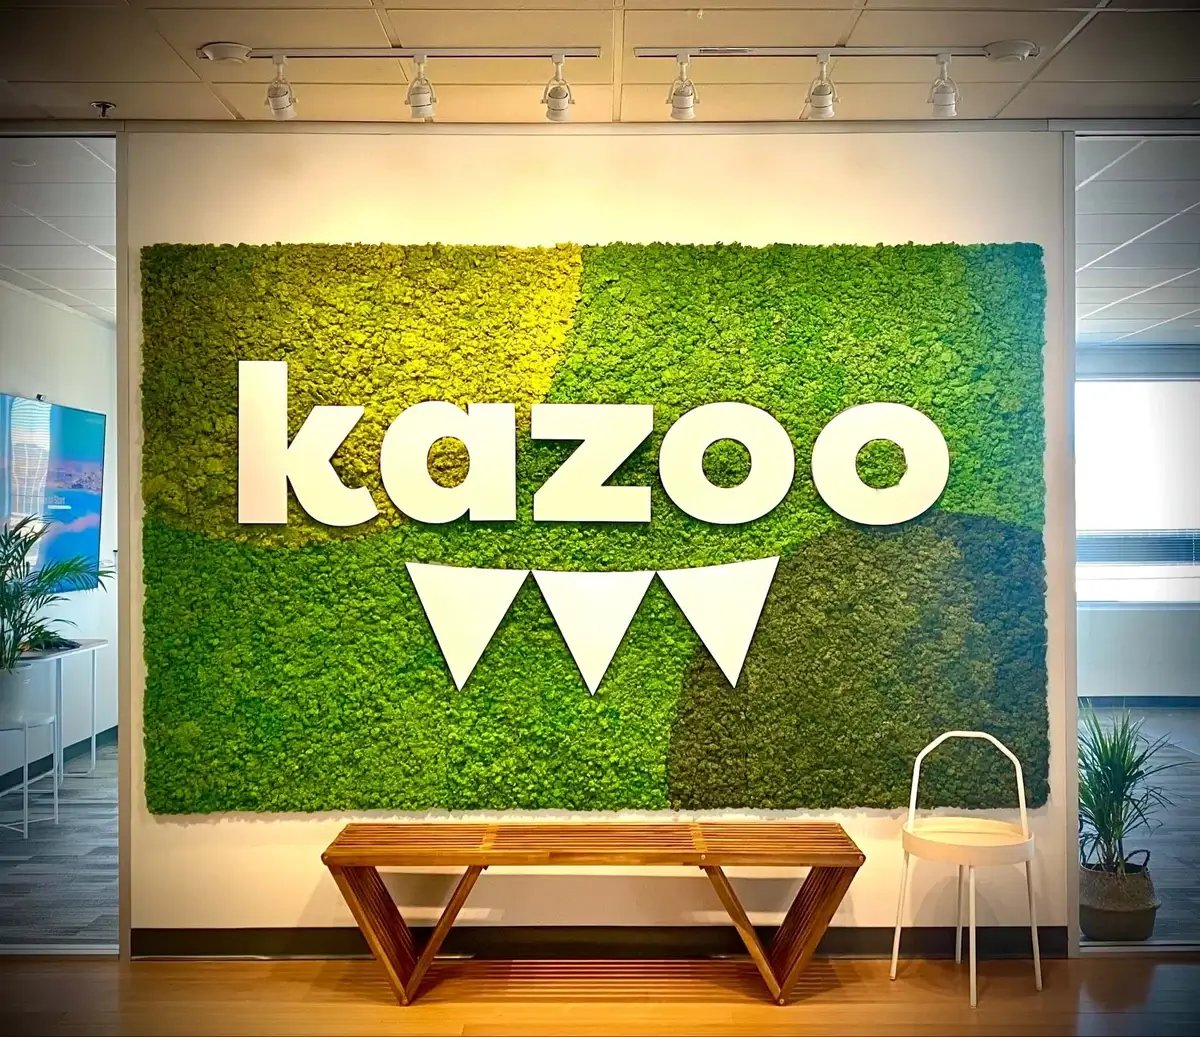 Kazoo moss wall, office interior